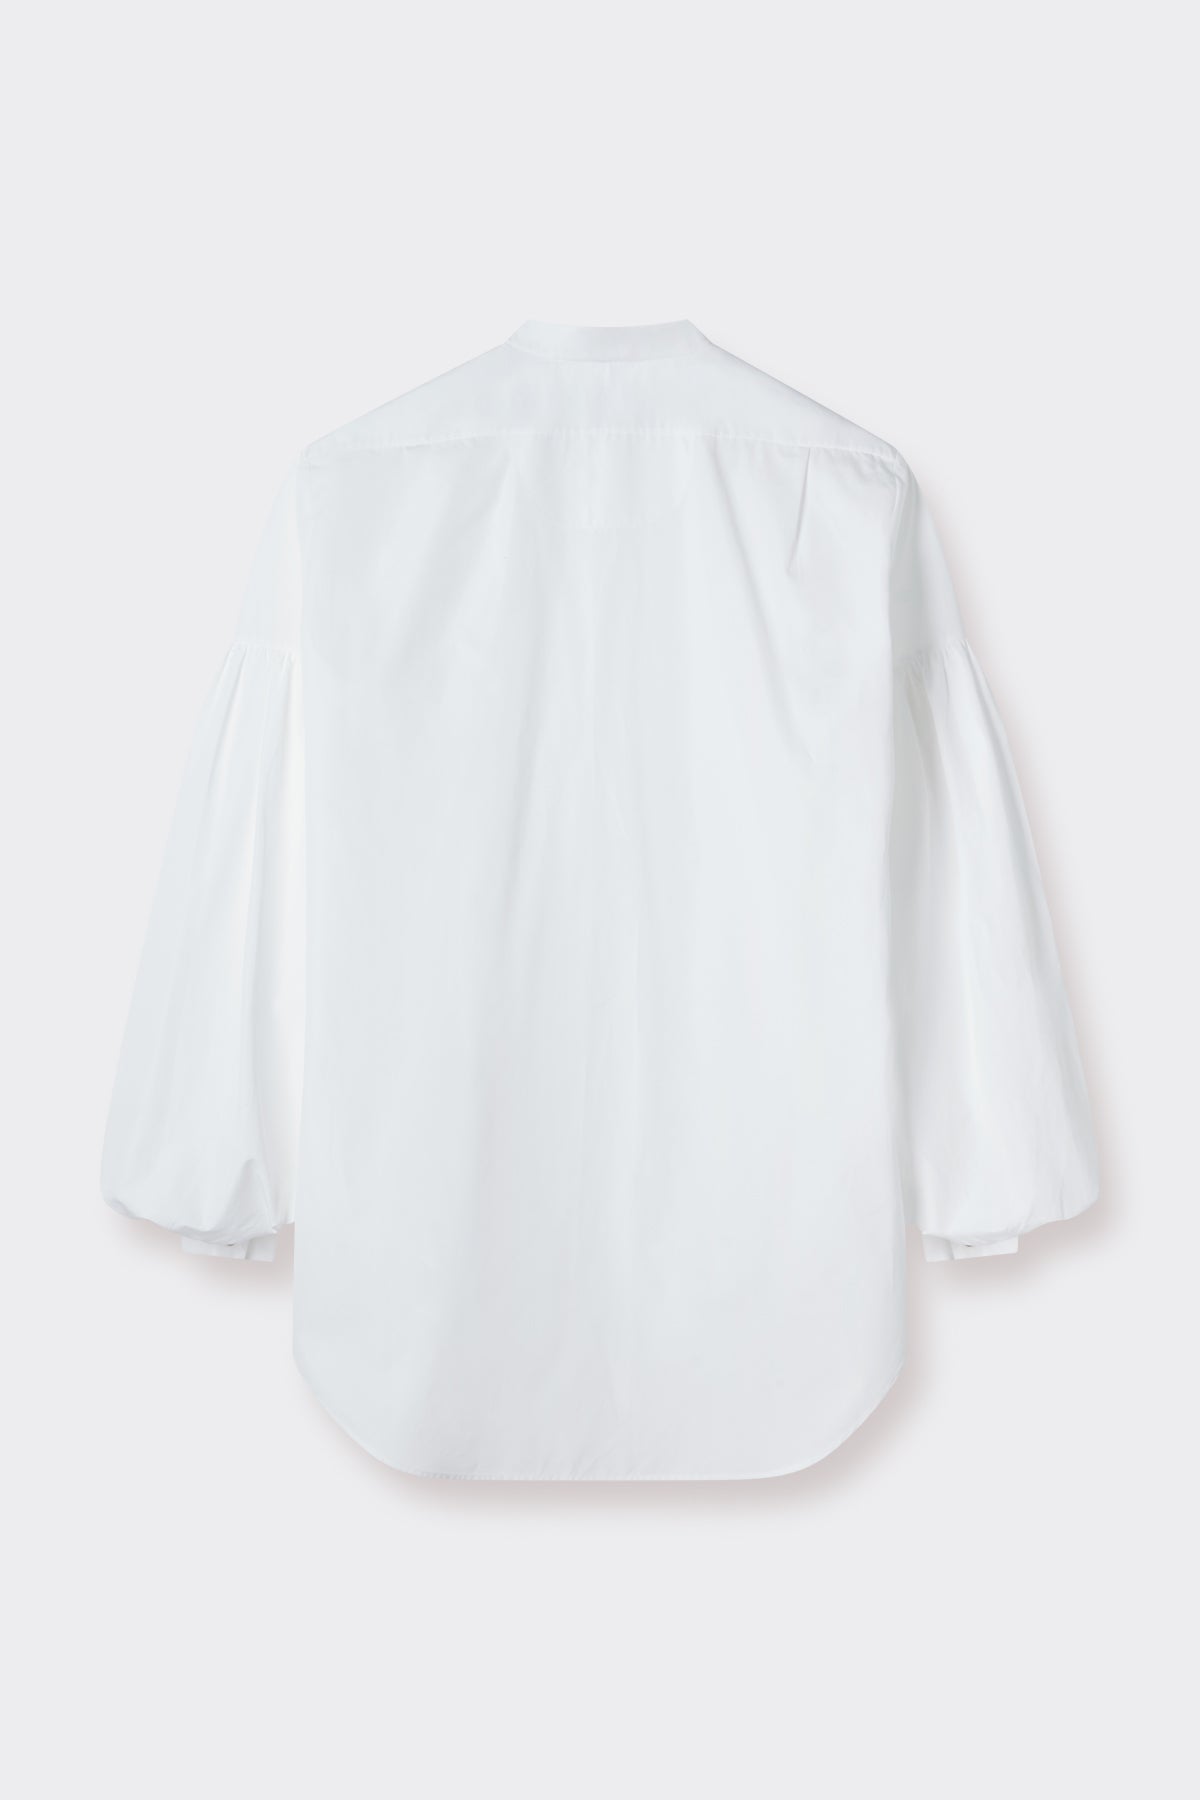 Aroha Shirt in White | Noon By Noor